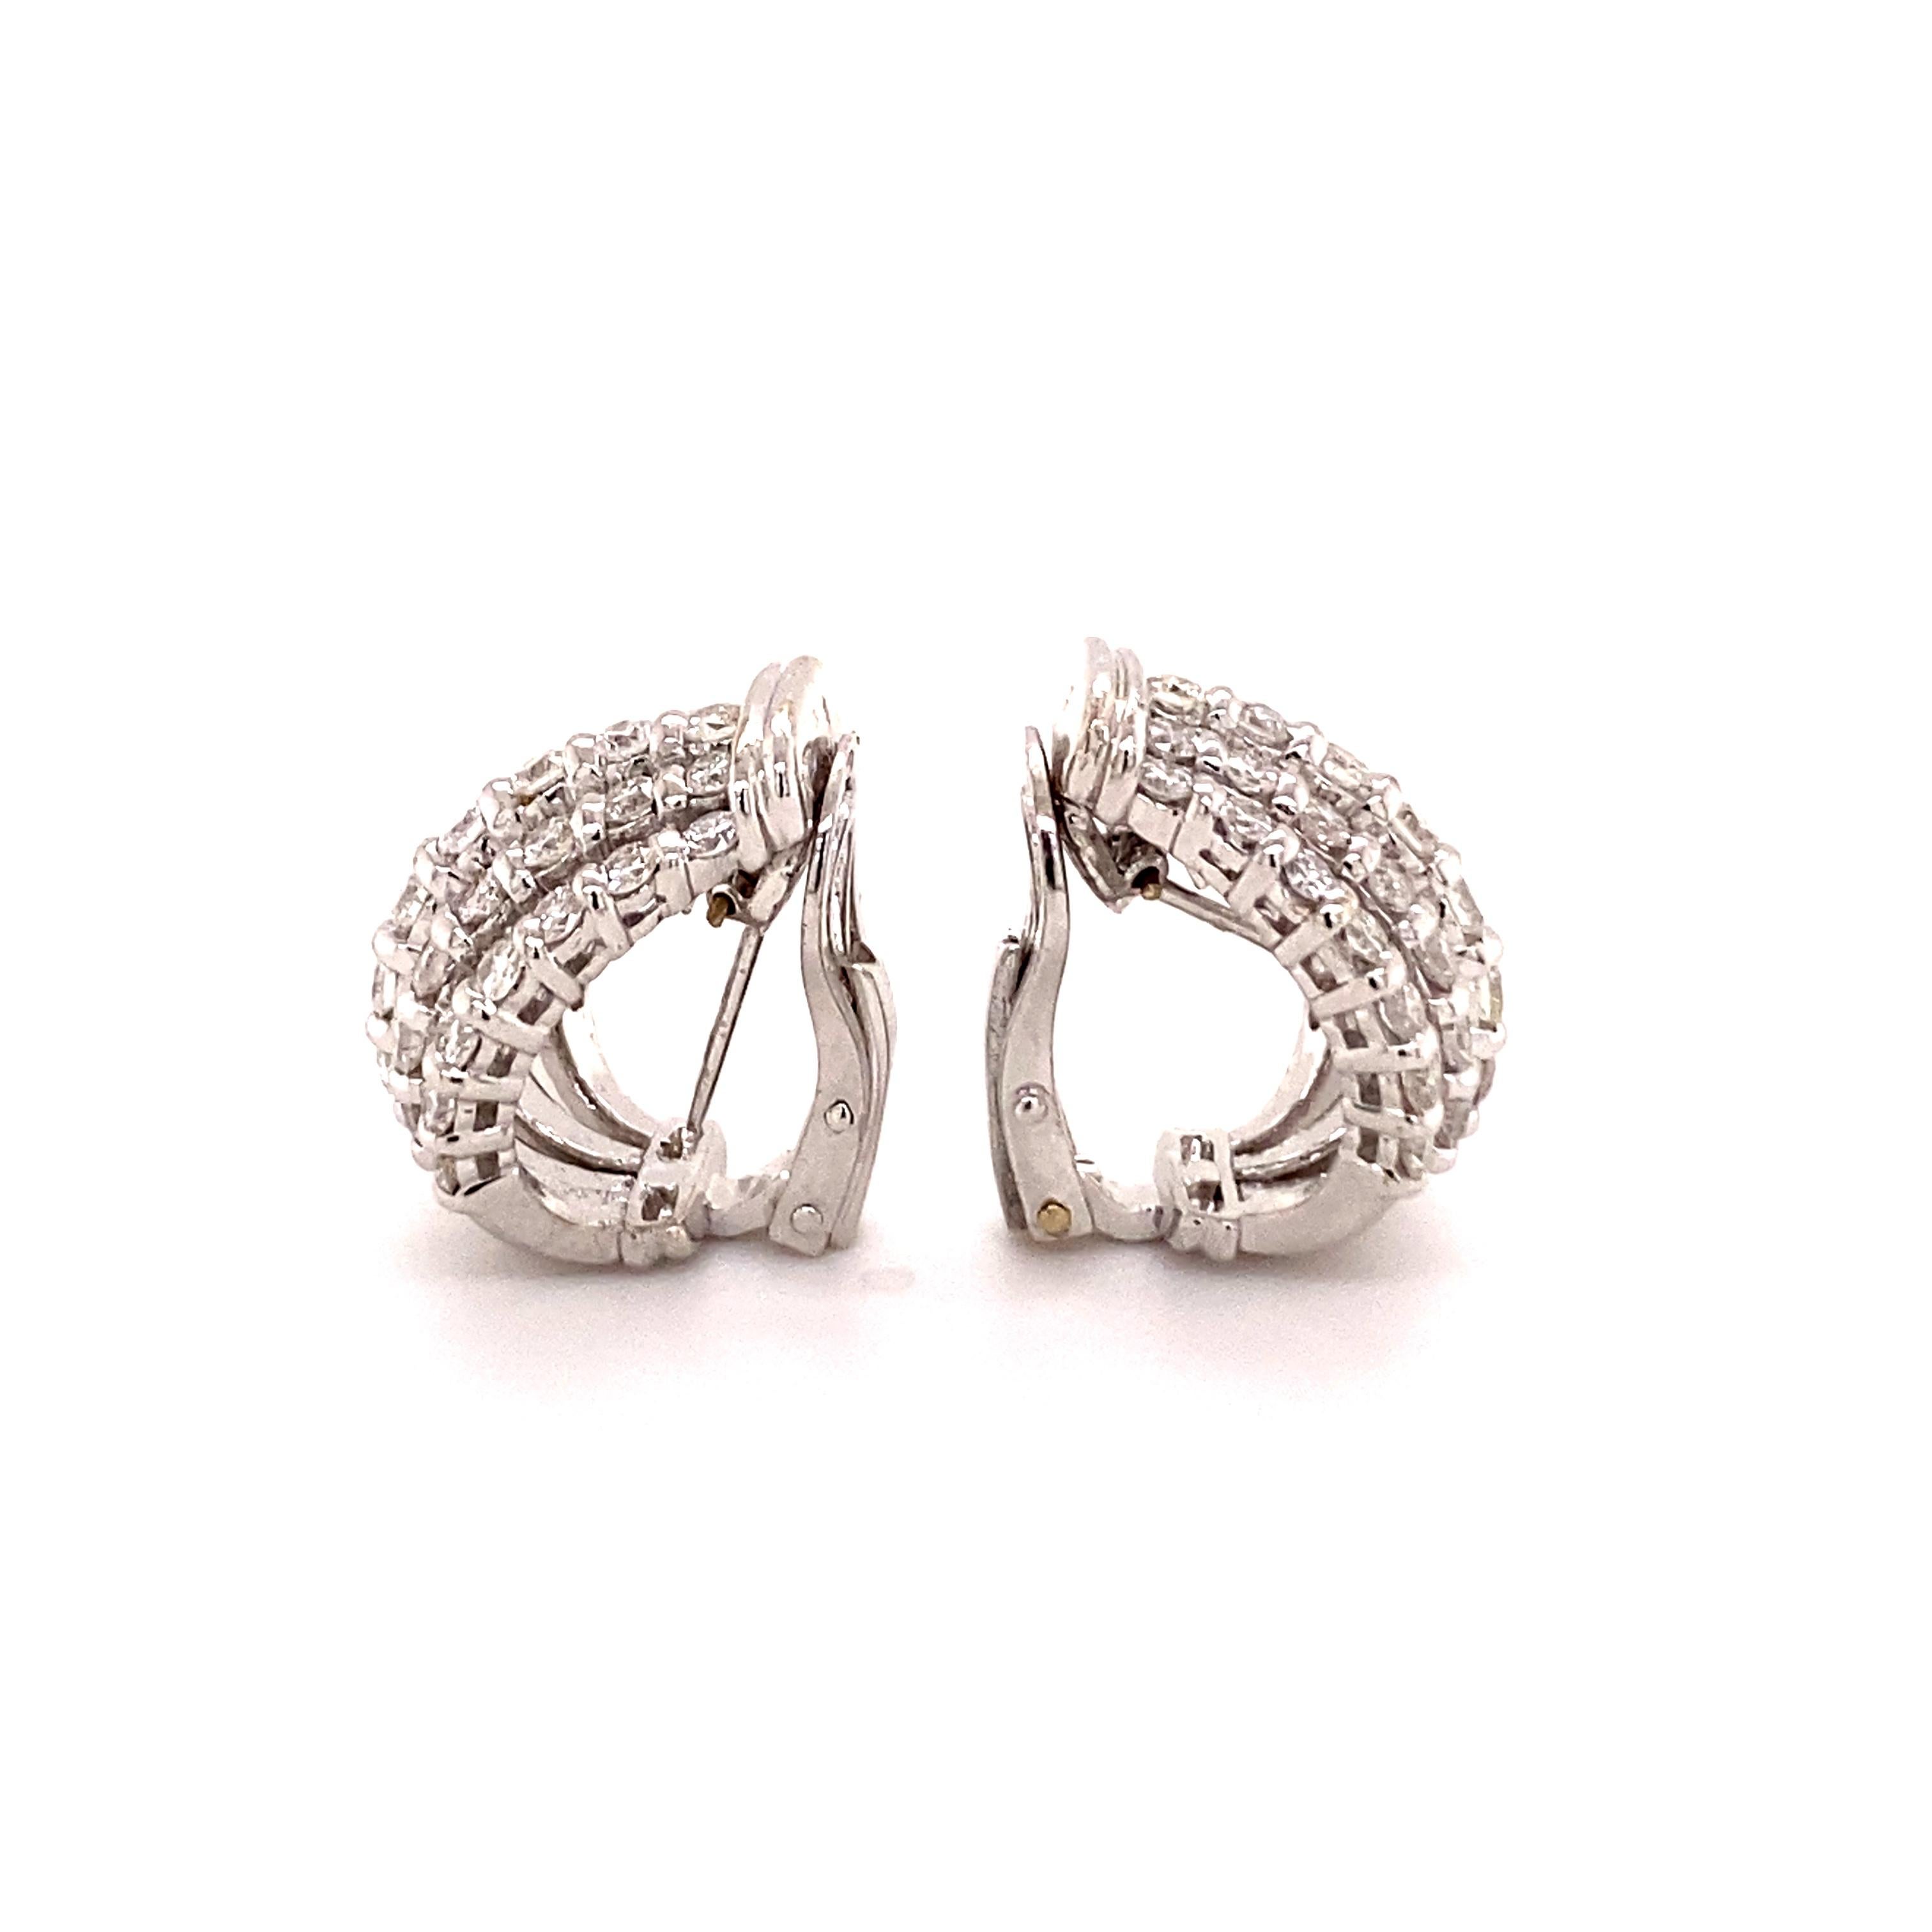 Contemporary Elegant Pair of Diamond Earclips in 18 Karat White Gold